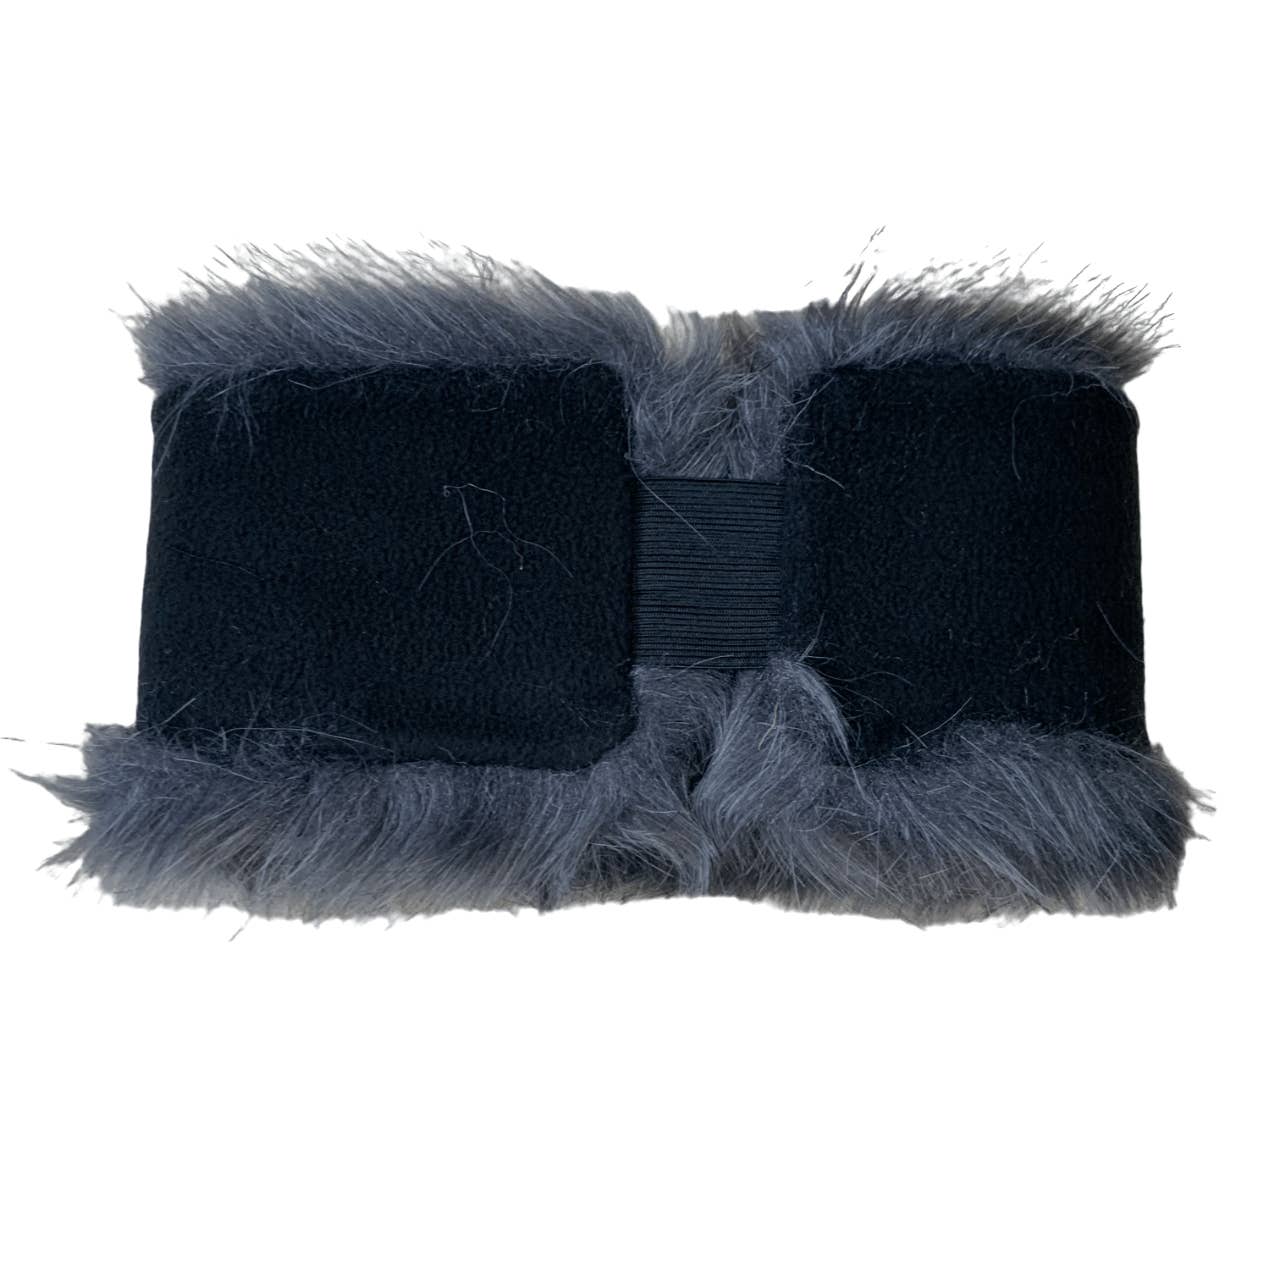 Horze Nadia Faux Fur Headband in Asphalt Dark Grey - One Size